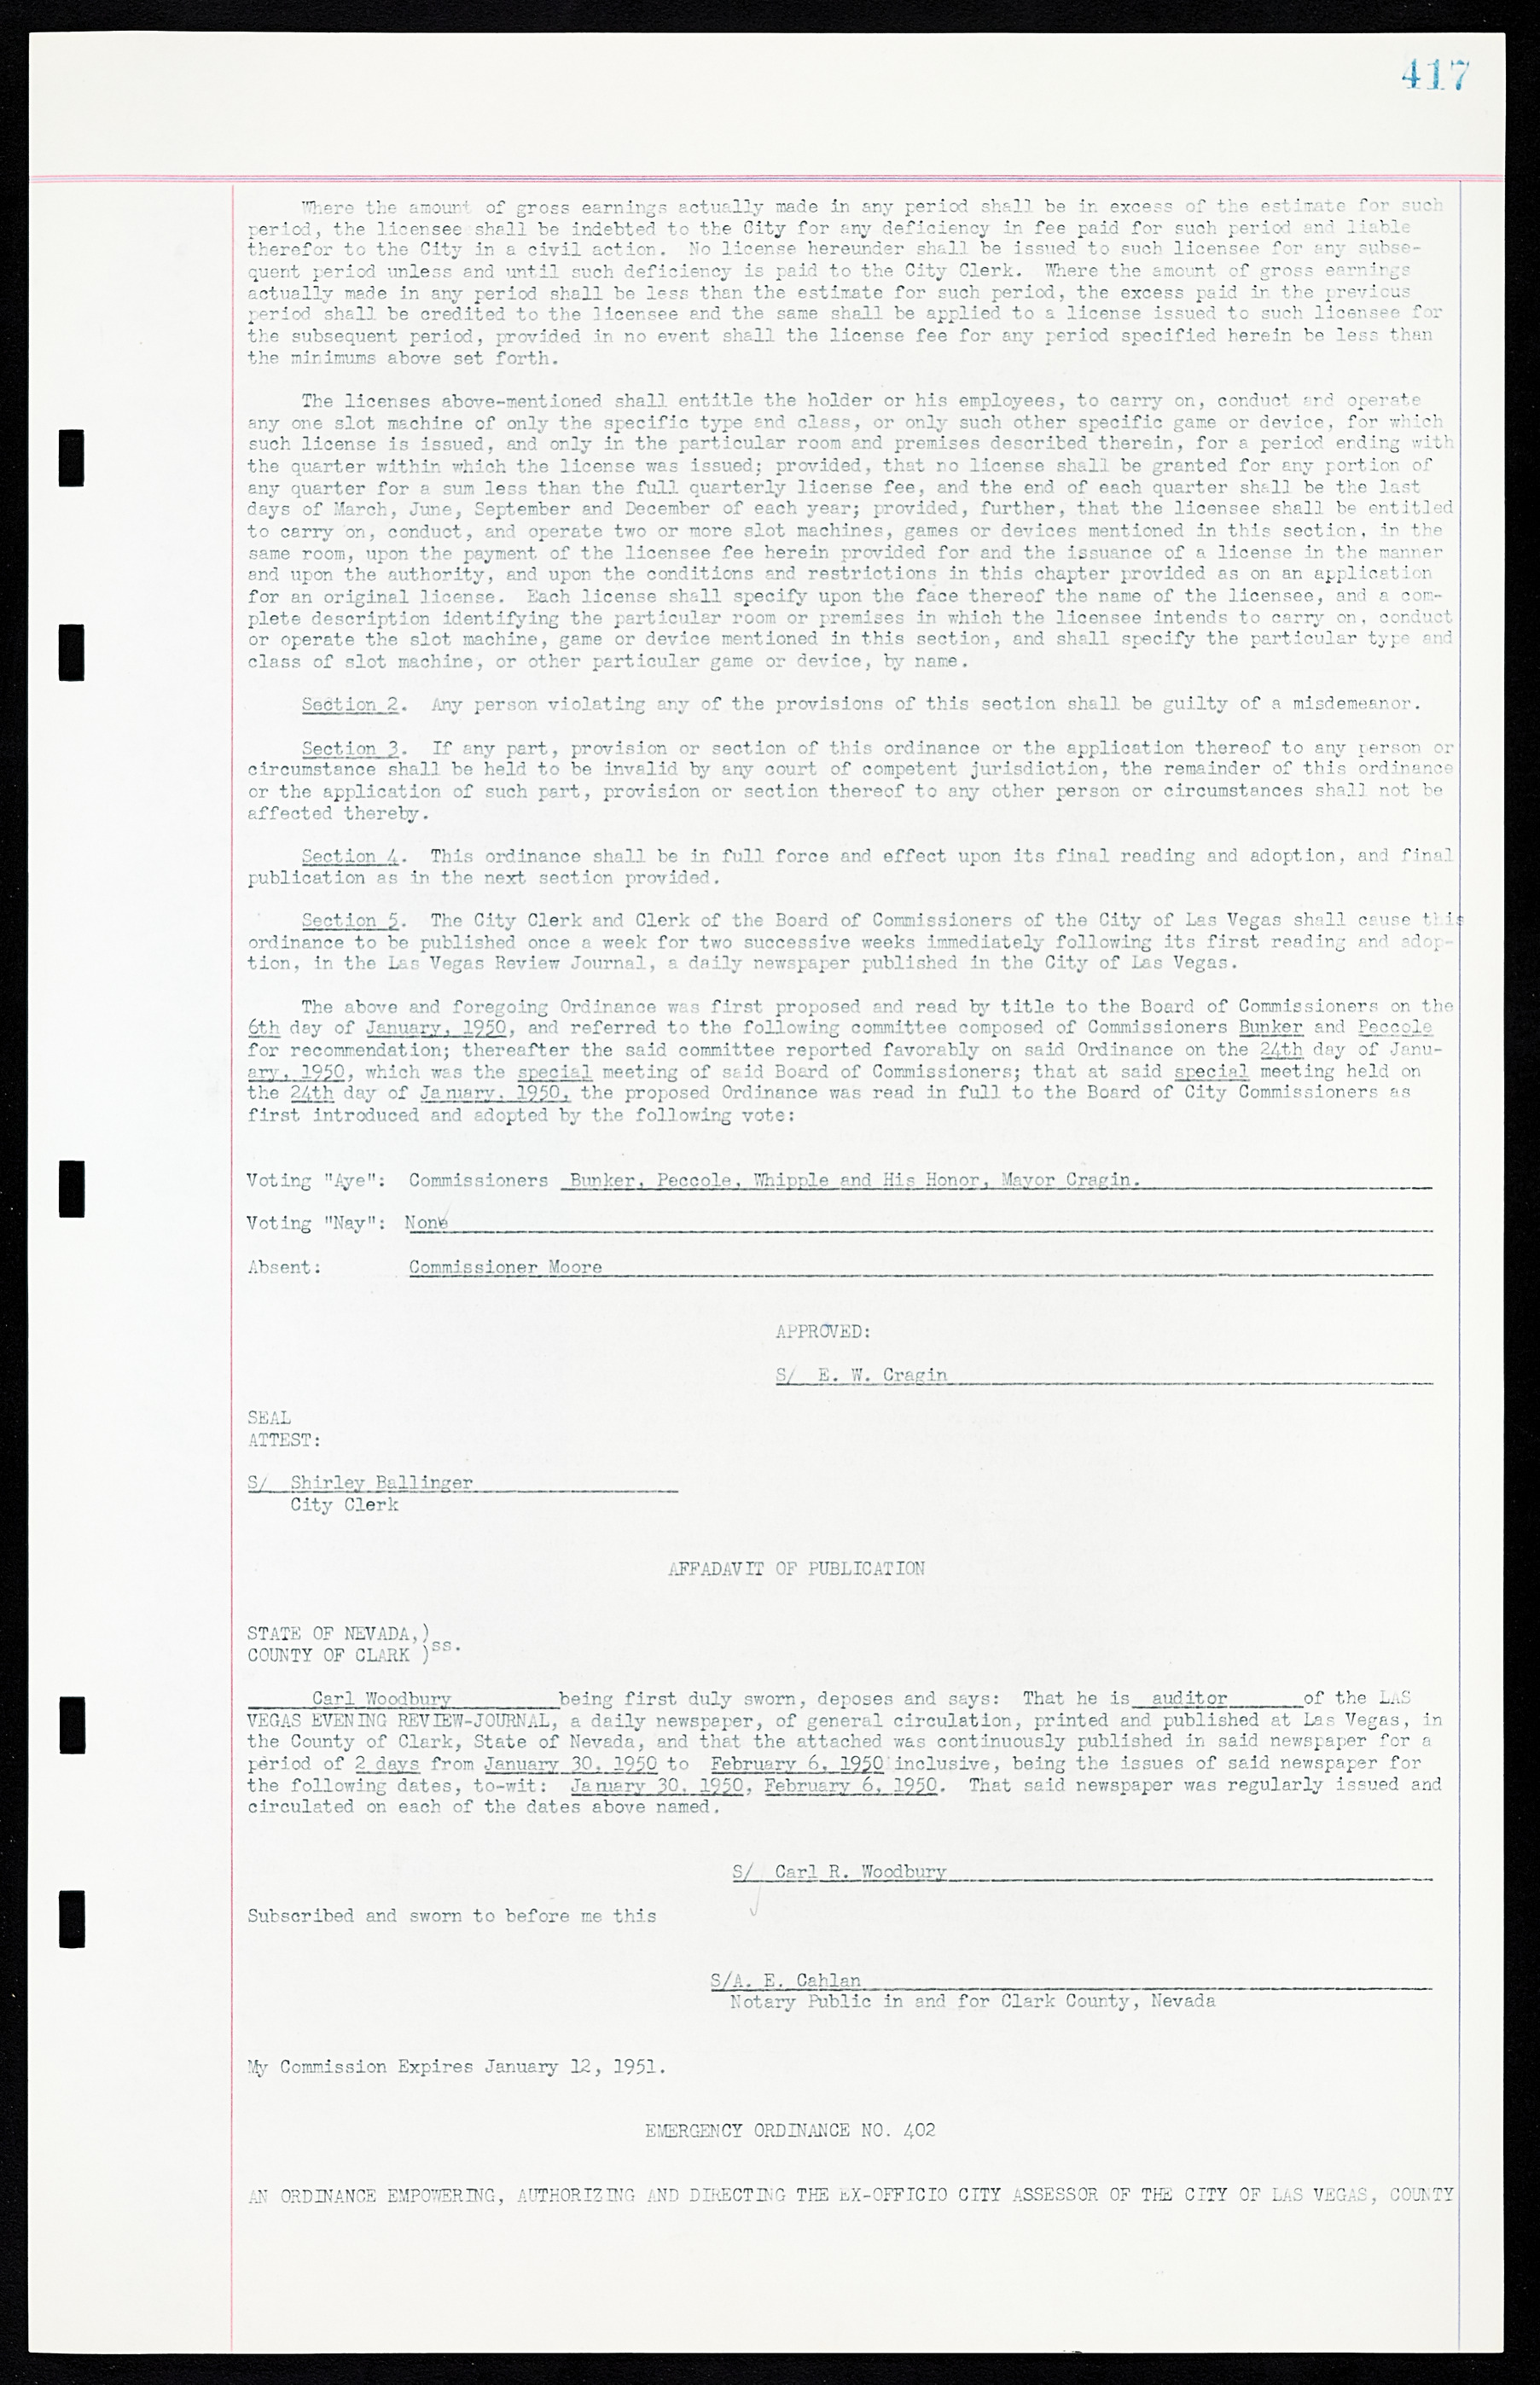 Las Vegas City Ordinances, March 31, 1933 to October 25, 1950, lvc000014-450